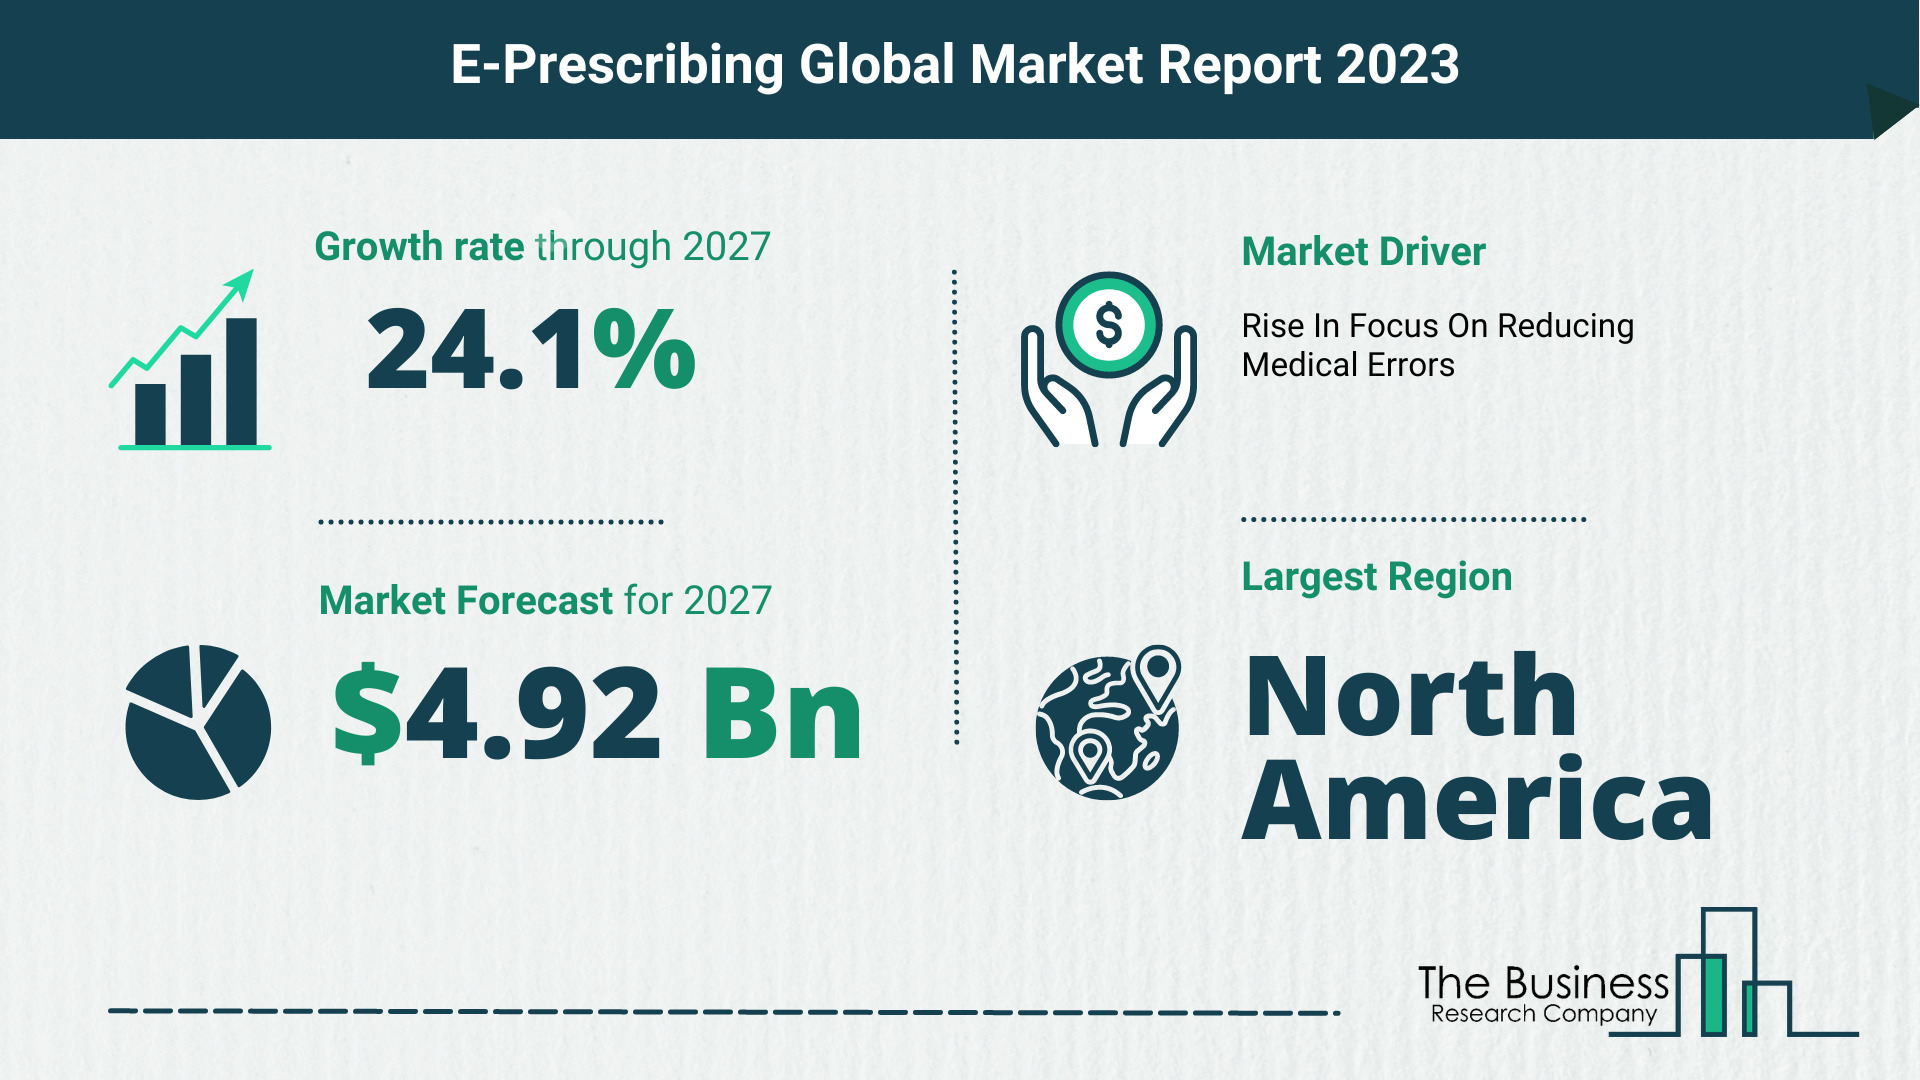 How Will The E-Prescribing Market Globally Expand In 2023?